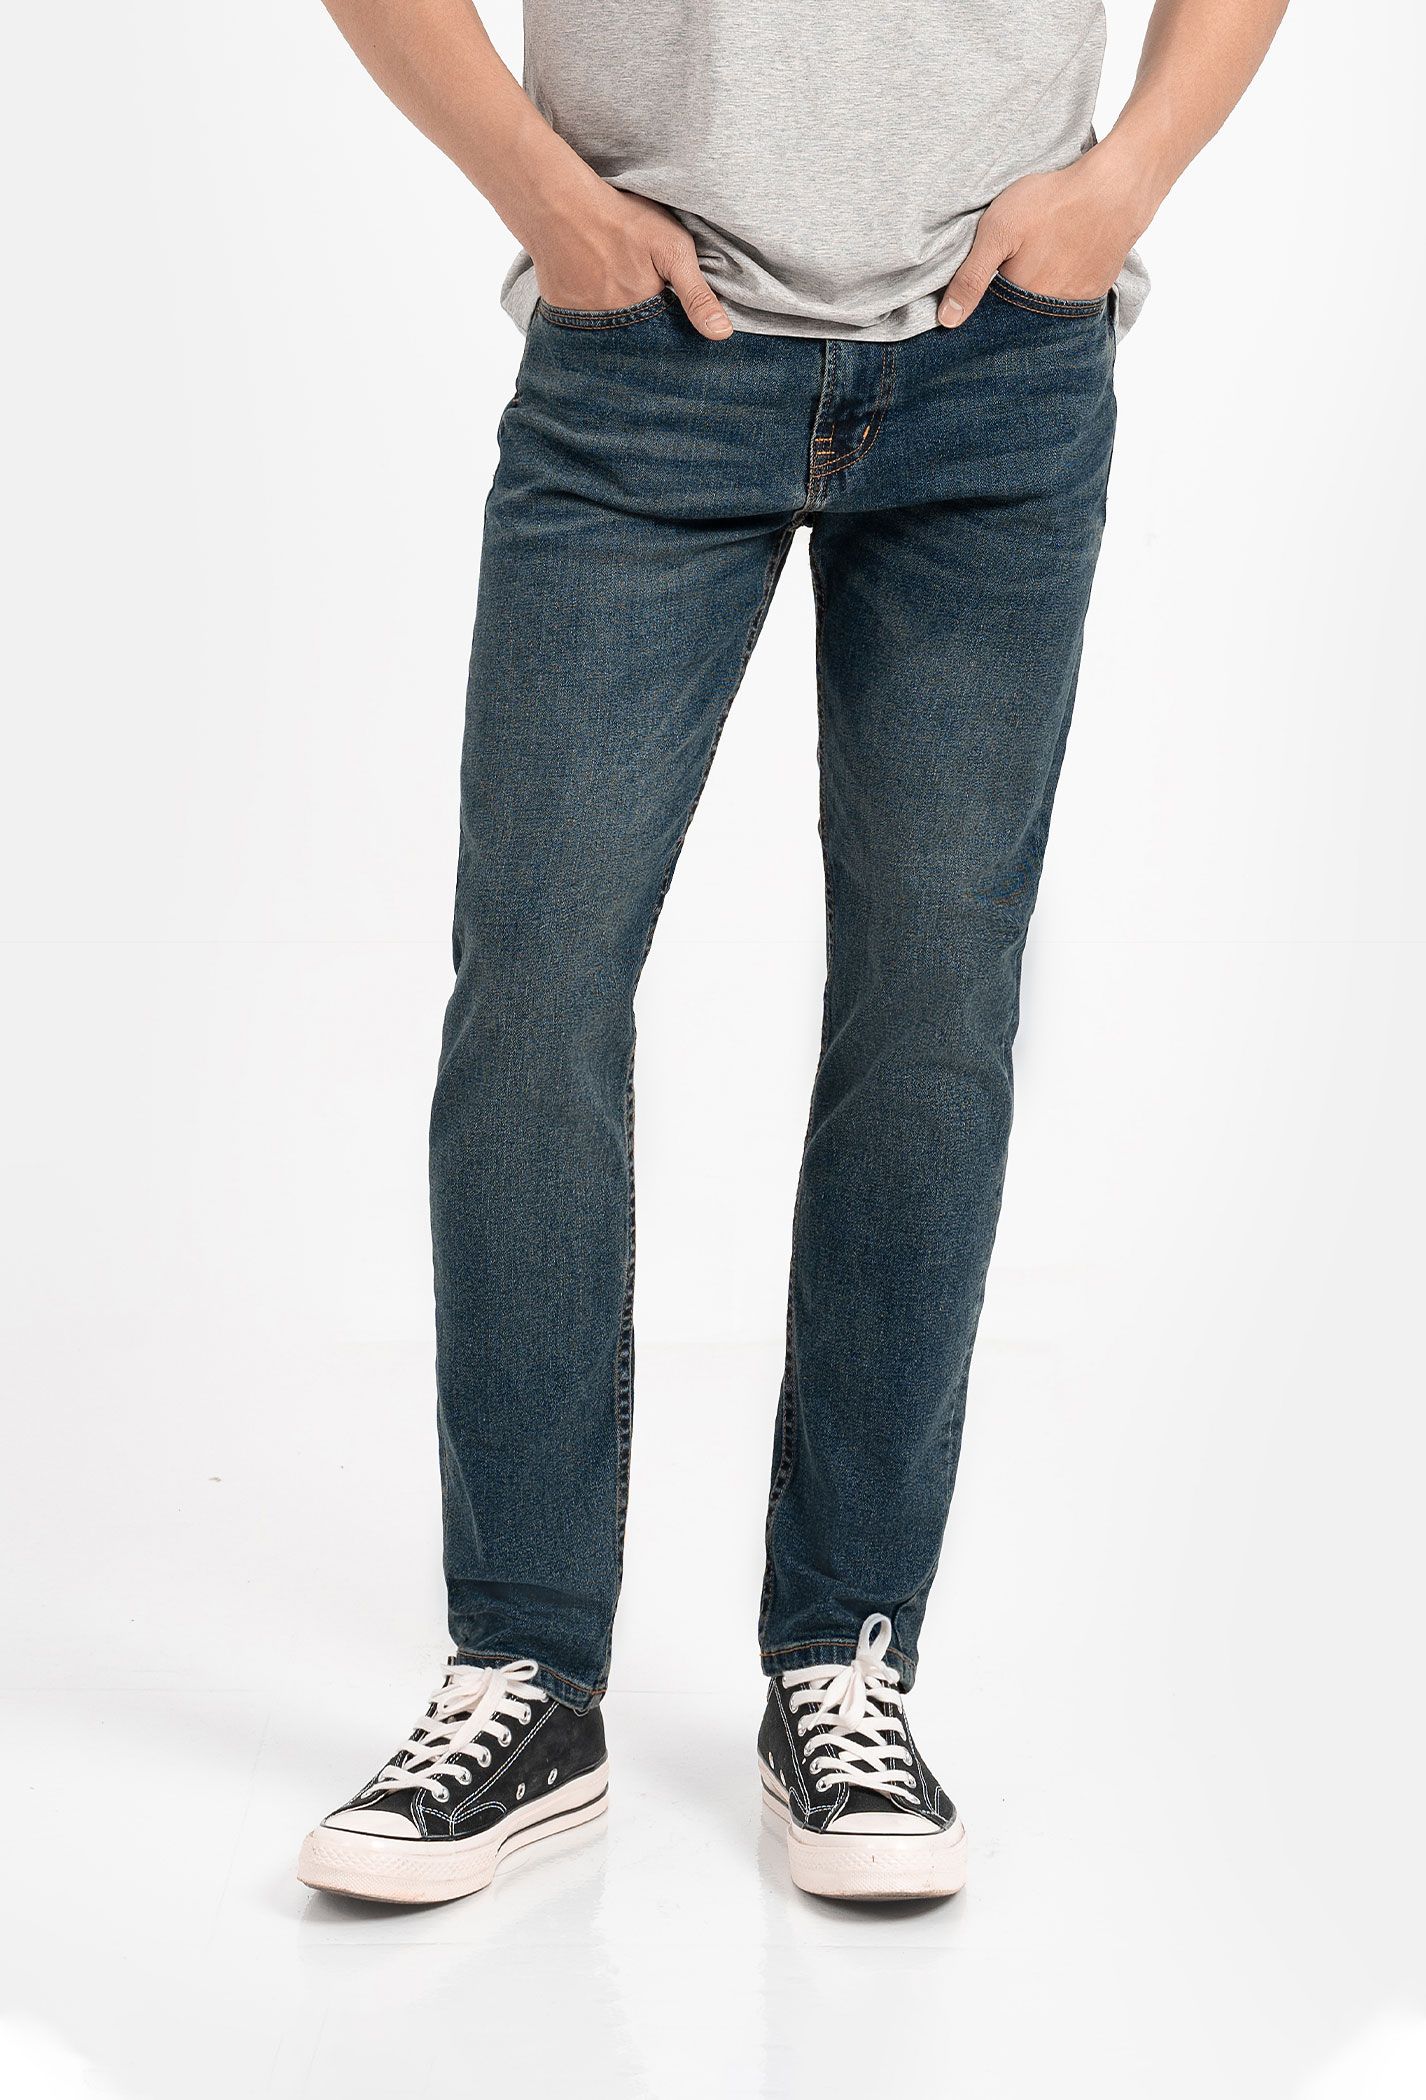 Quần Jeans Basic Slim V2 Xanh nh���t